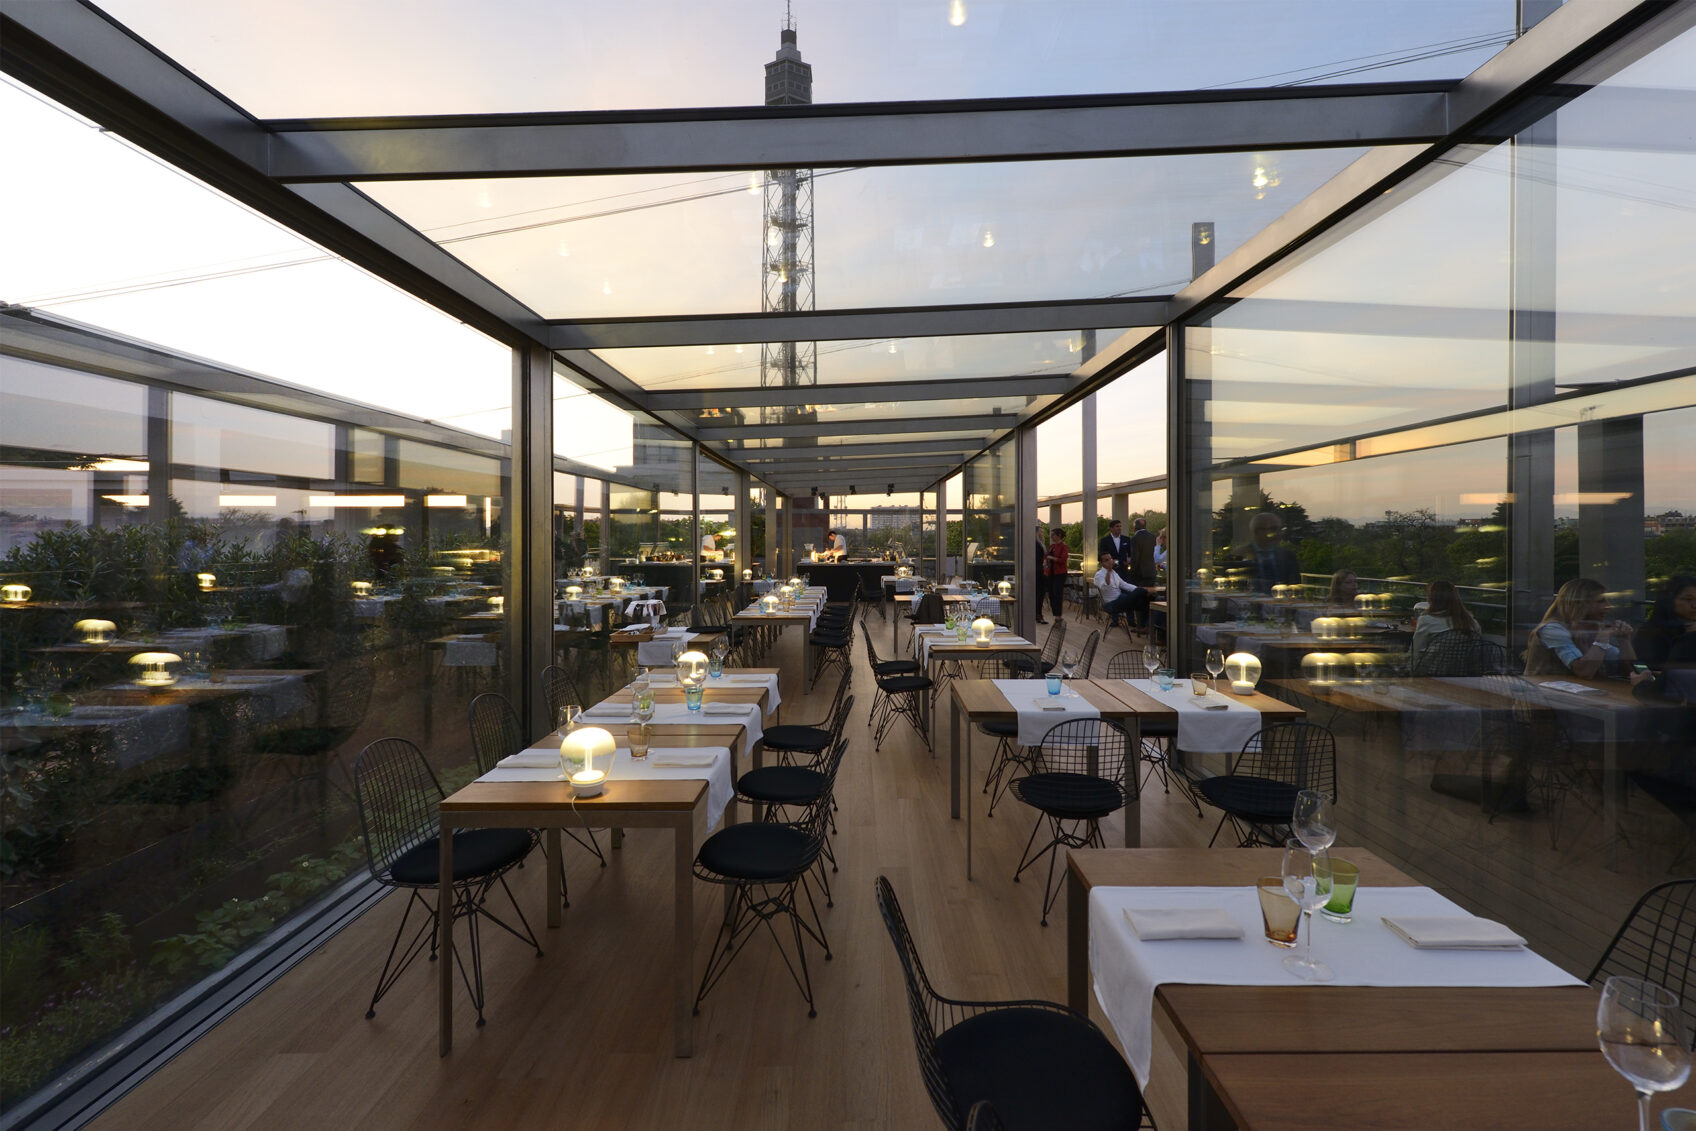 Milan triennale rooftop terrace restaurant at sunset